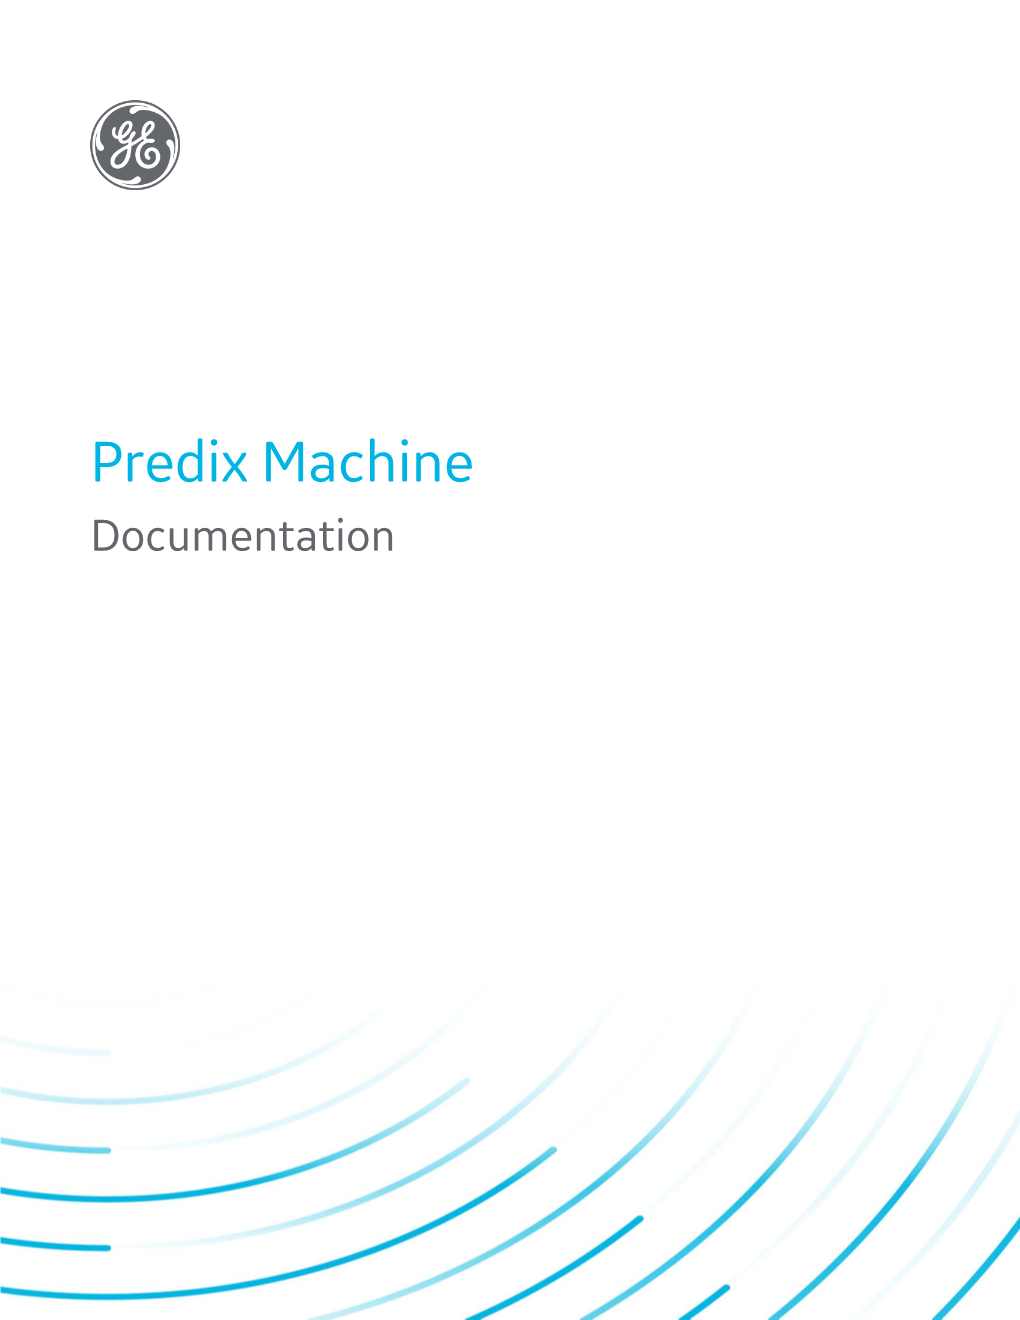 Predix Machine Documentation